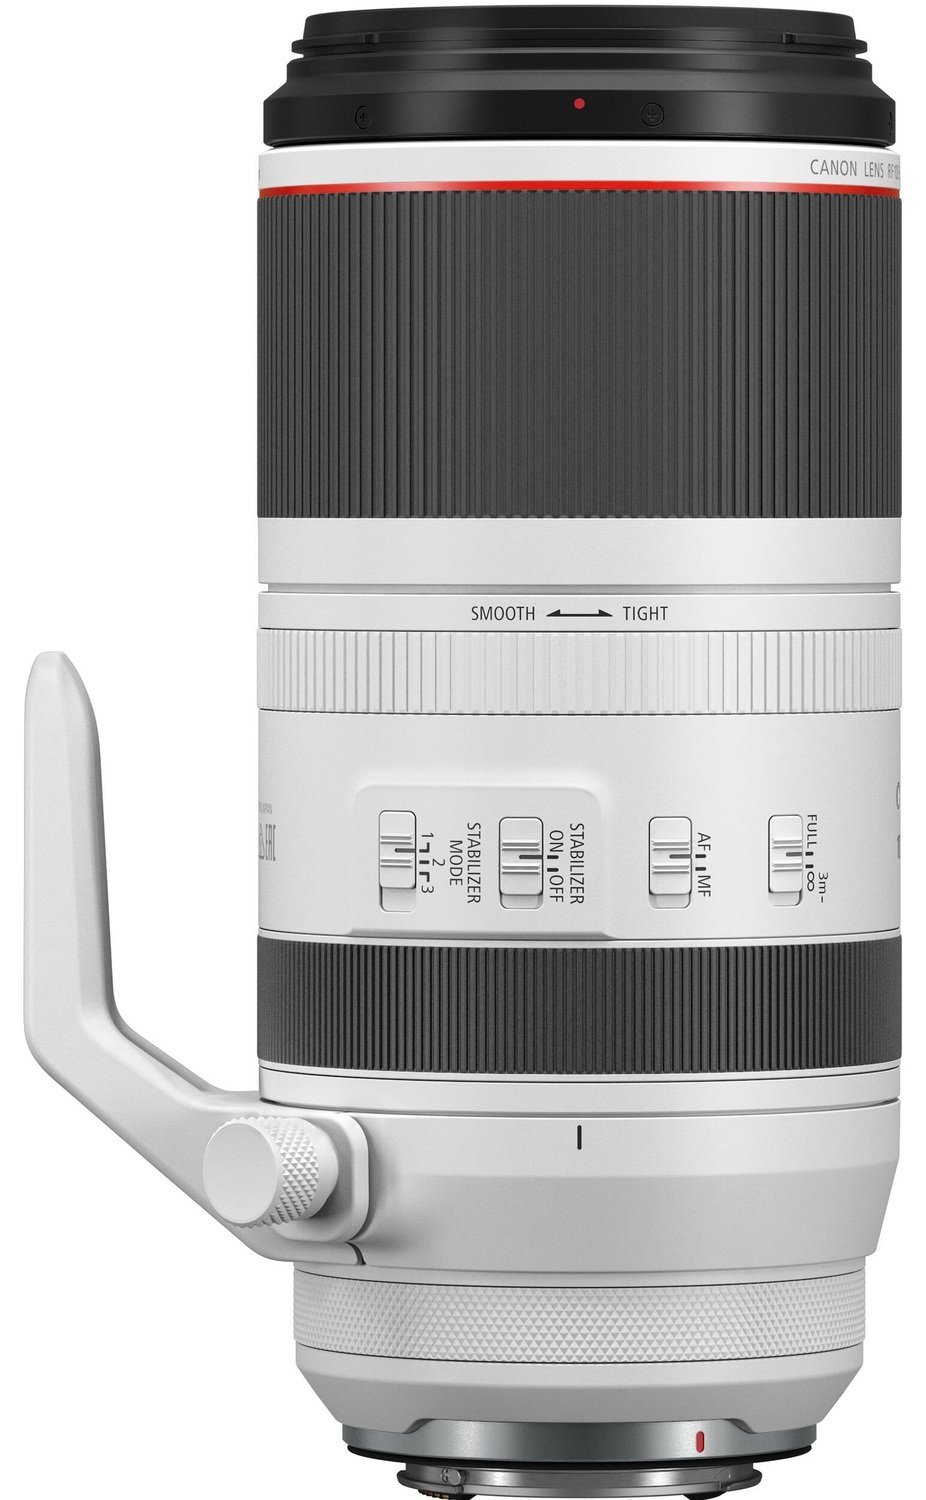 Объектив Canon RF 100-500mm f/4.5-7.1L IS USM, белый